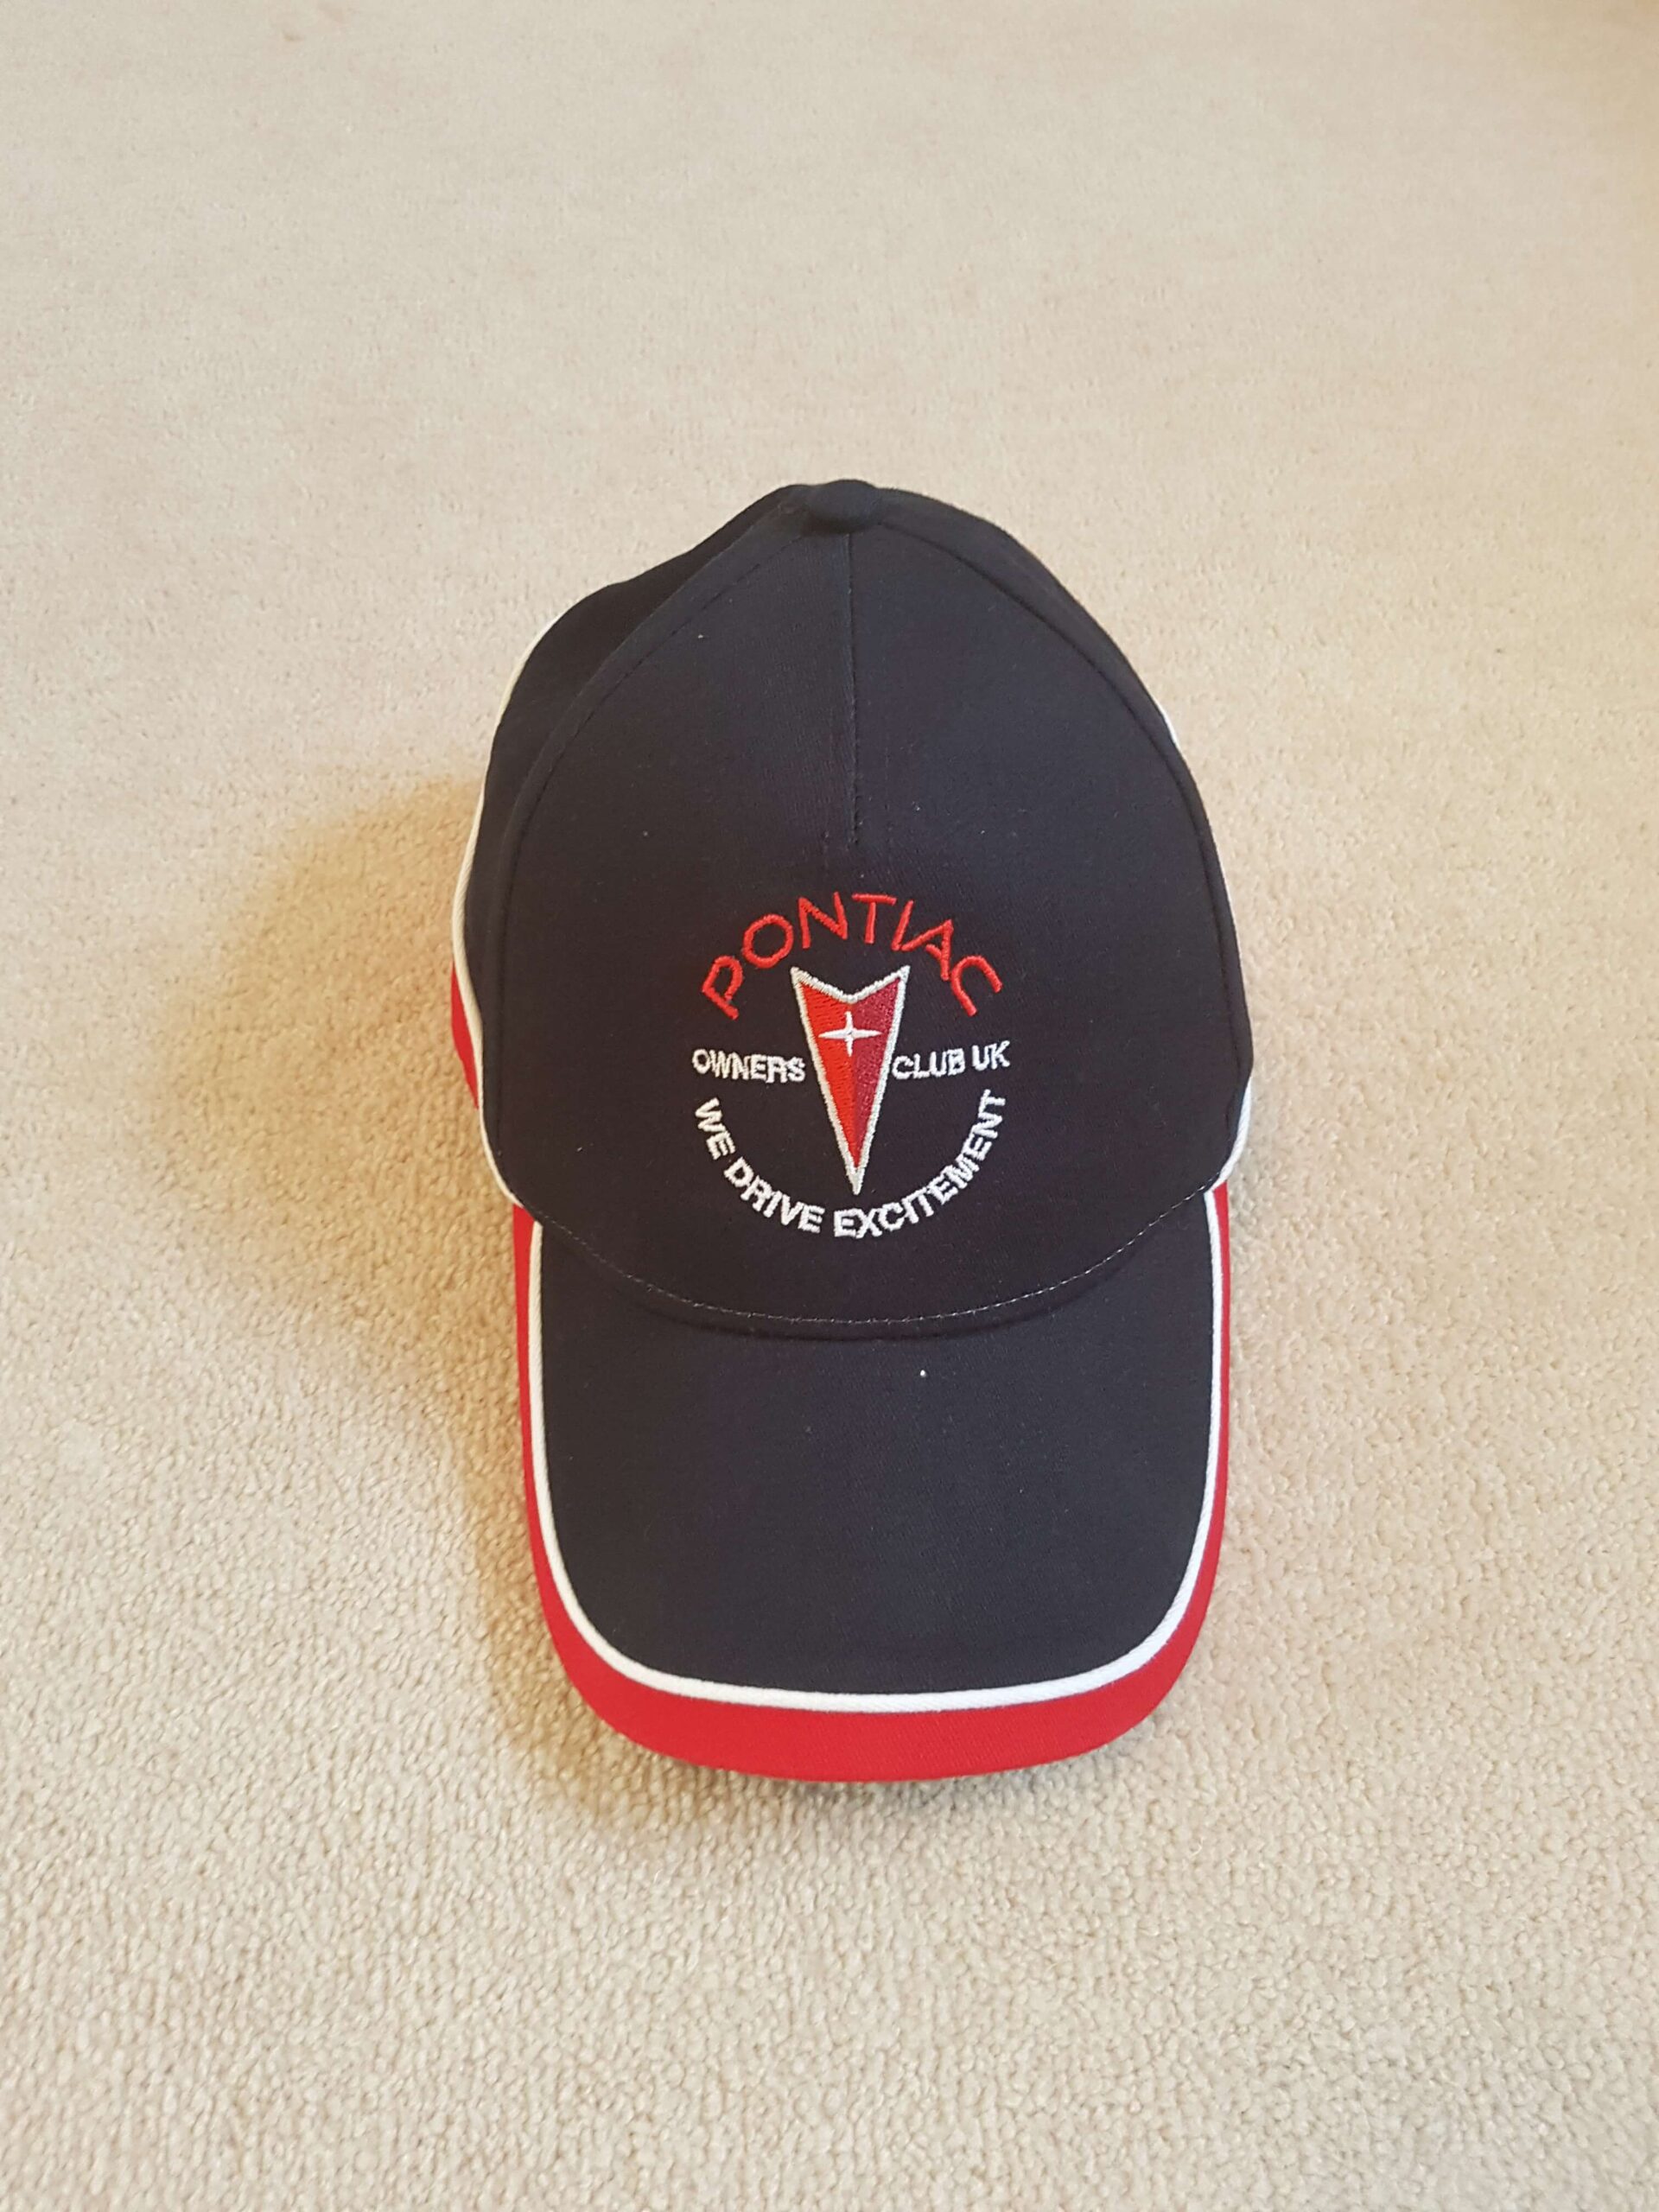 Merchandise - Pontiac Owners Club UK